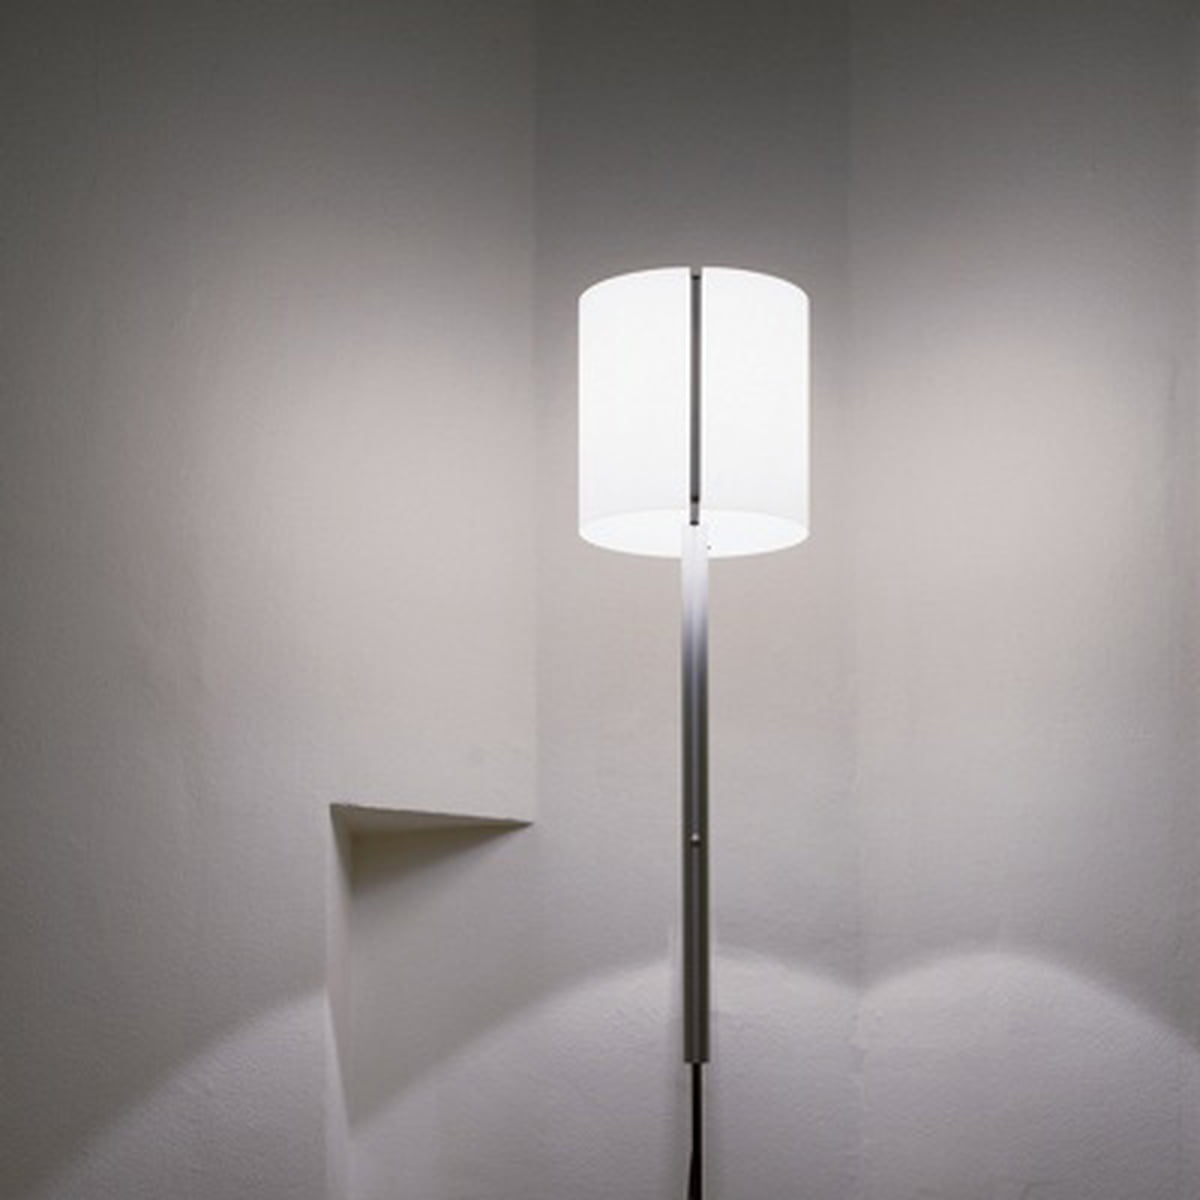 Serienlighting Jones Master Floor Lamp Small Shade With Yellow Glass Insert pertaining to measurements 1200 X 1200